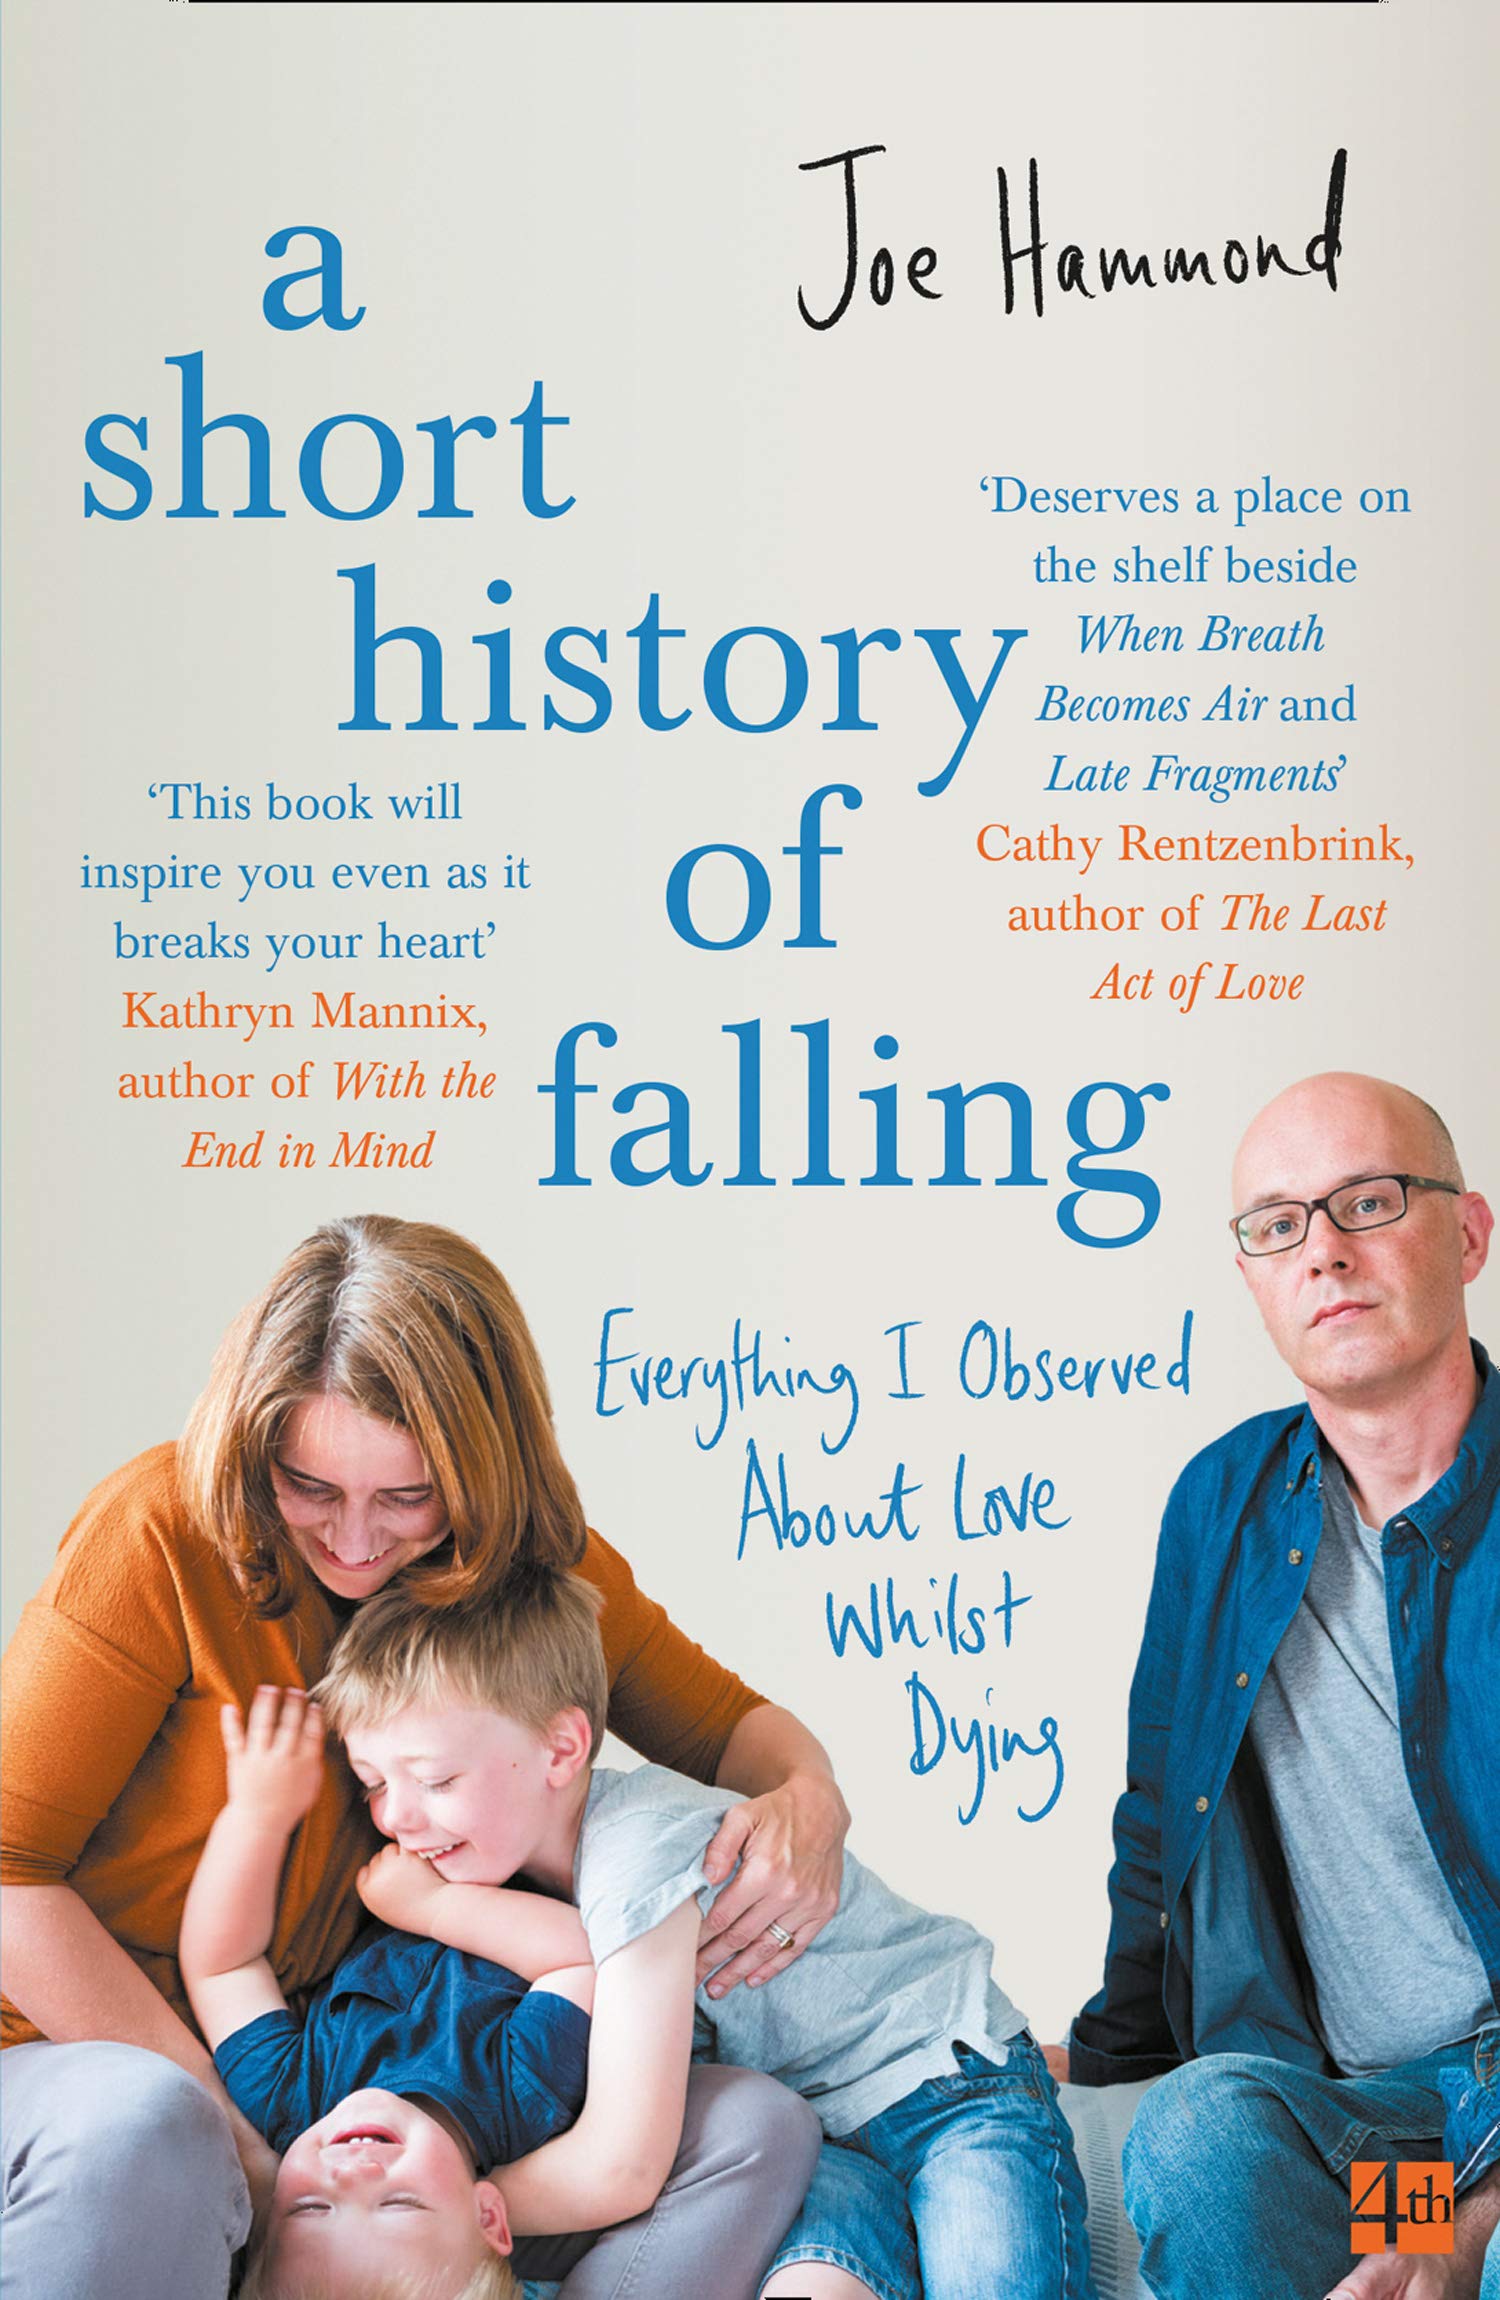 A Short History of Falling | Joe Hammond